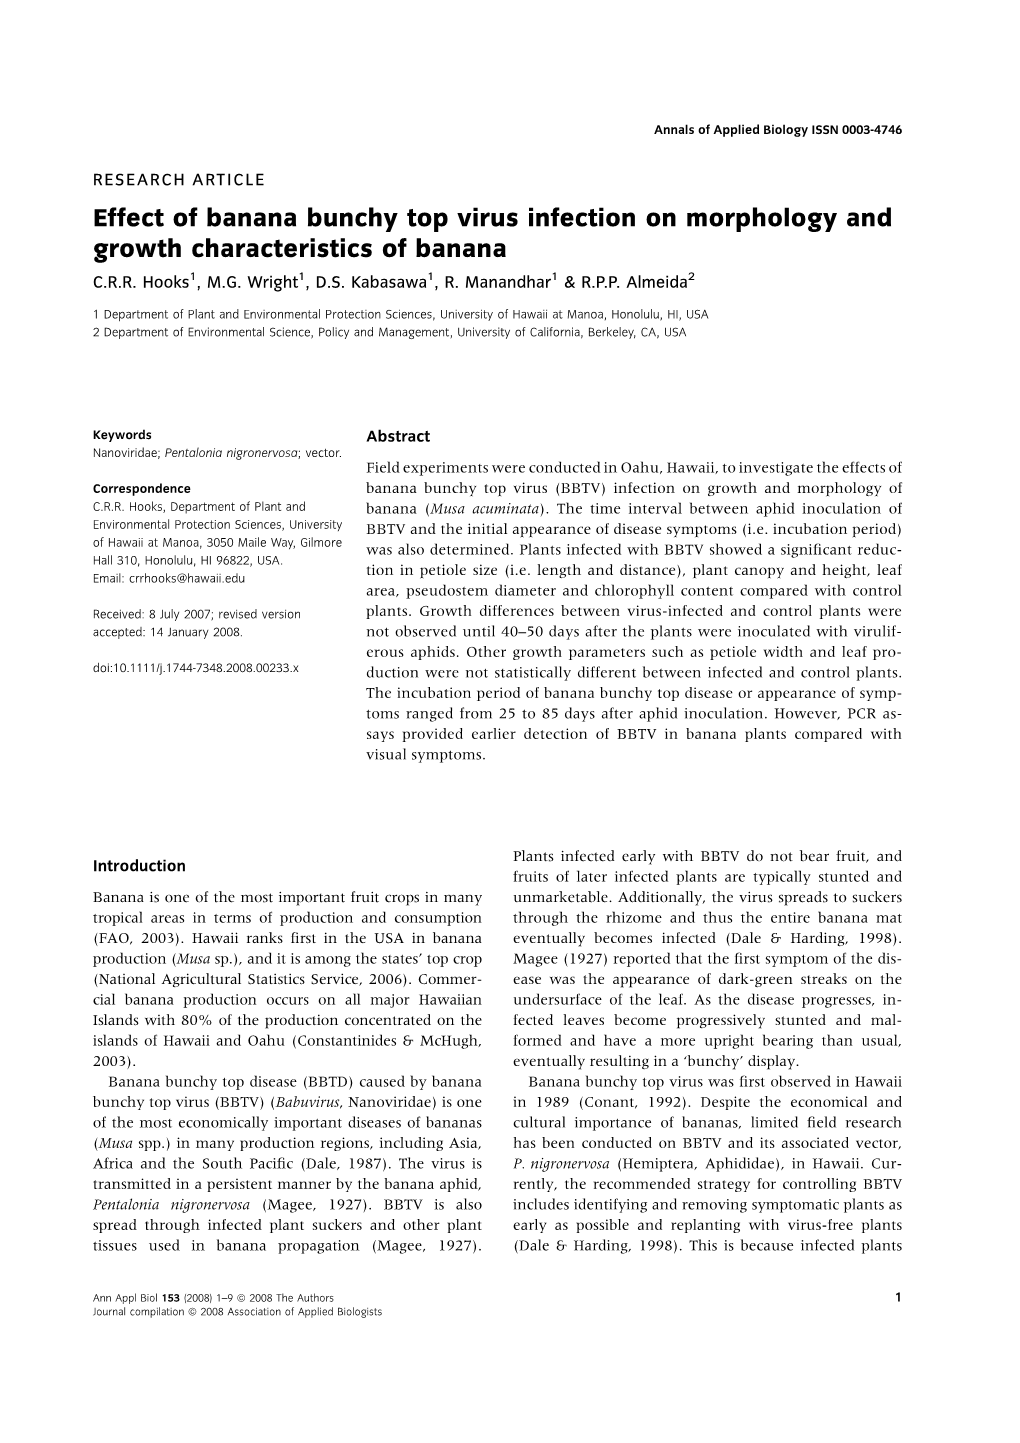 Effect of Banana Bunchy Top Virus Infection on Morphology and Growth Characteristics of Banana C.R.R